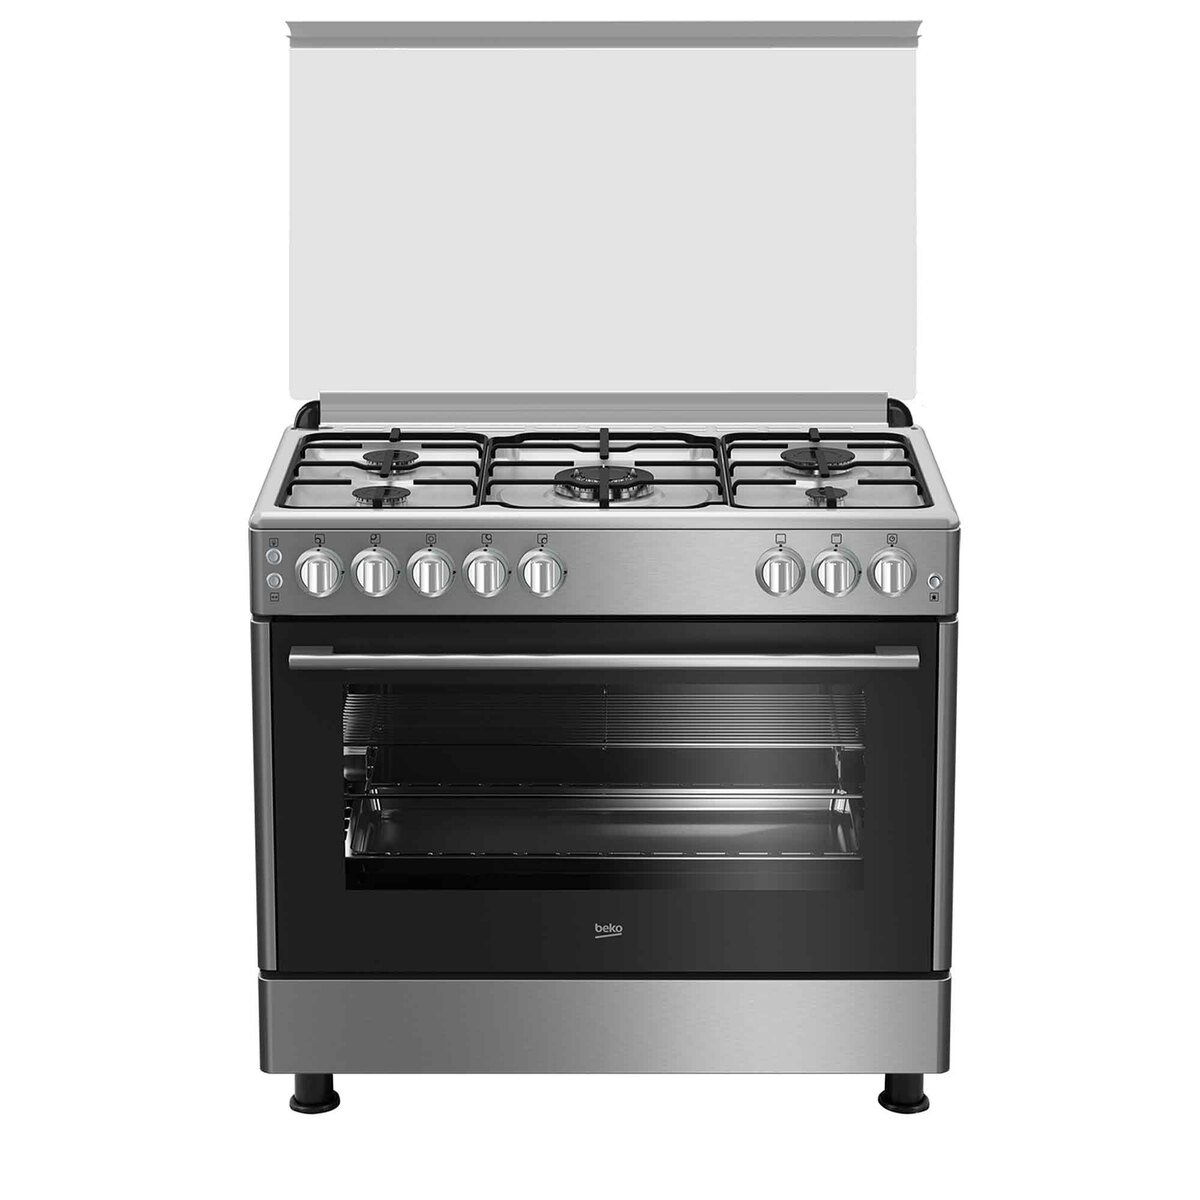 Beko Freestanding Cooking Range-GG15120FX,90x60 Cm,5 Burner